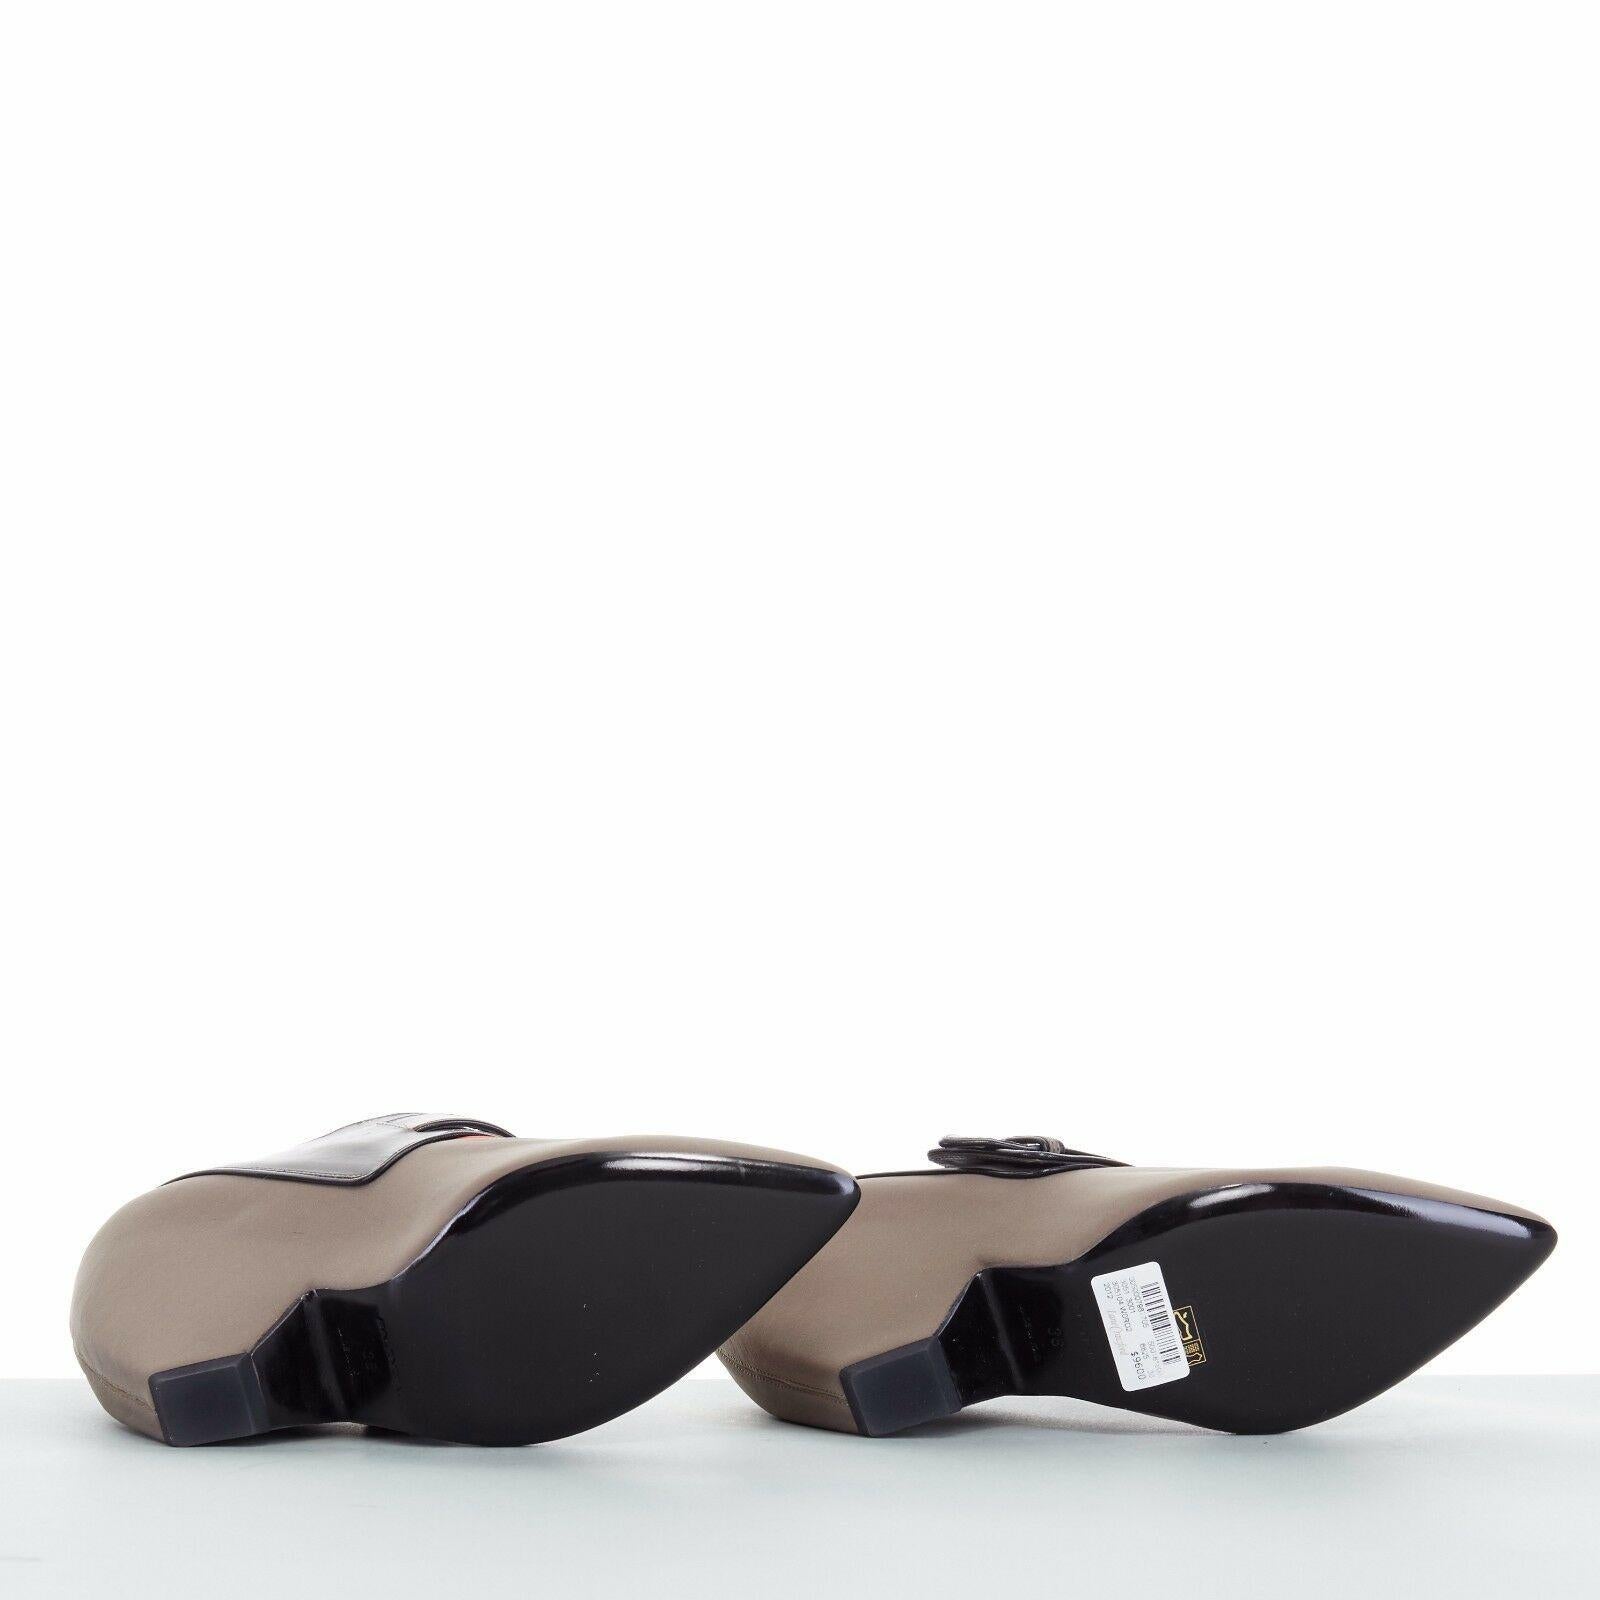 new BALENCIAGA GHESQUIERE AW12 grey orange pointy wedge heel shoes EU38 US8 UK5 1